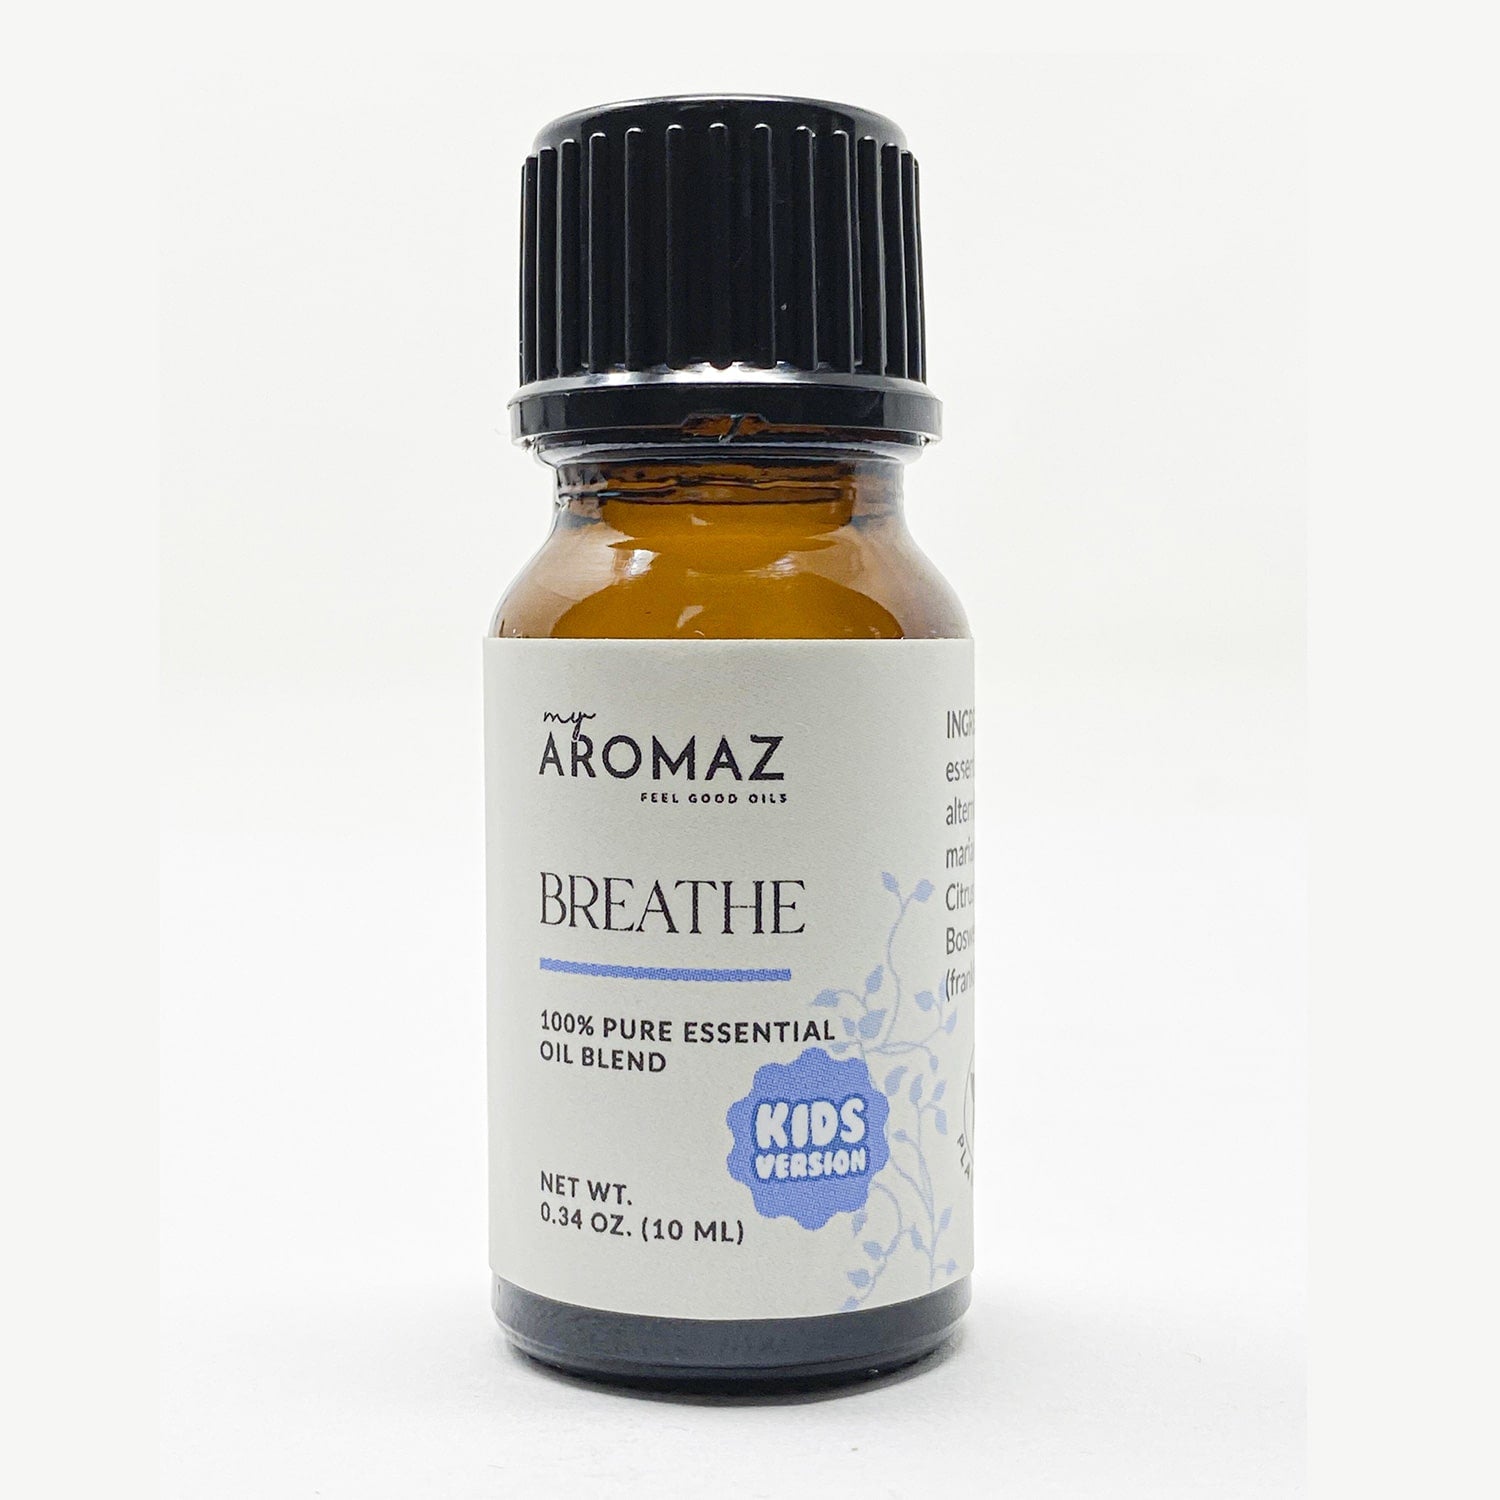 Breathe, Essential oils blend for diffuser